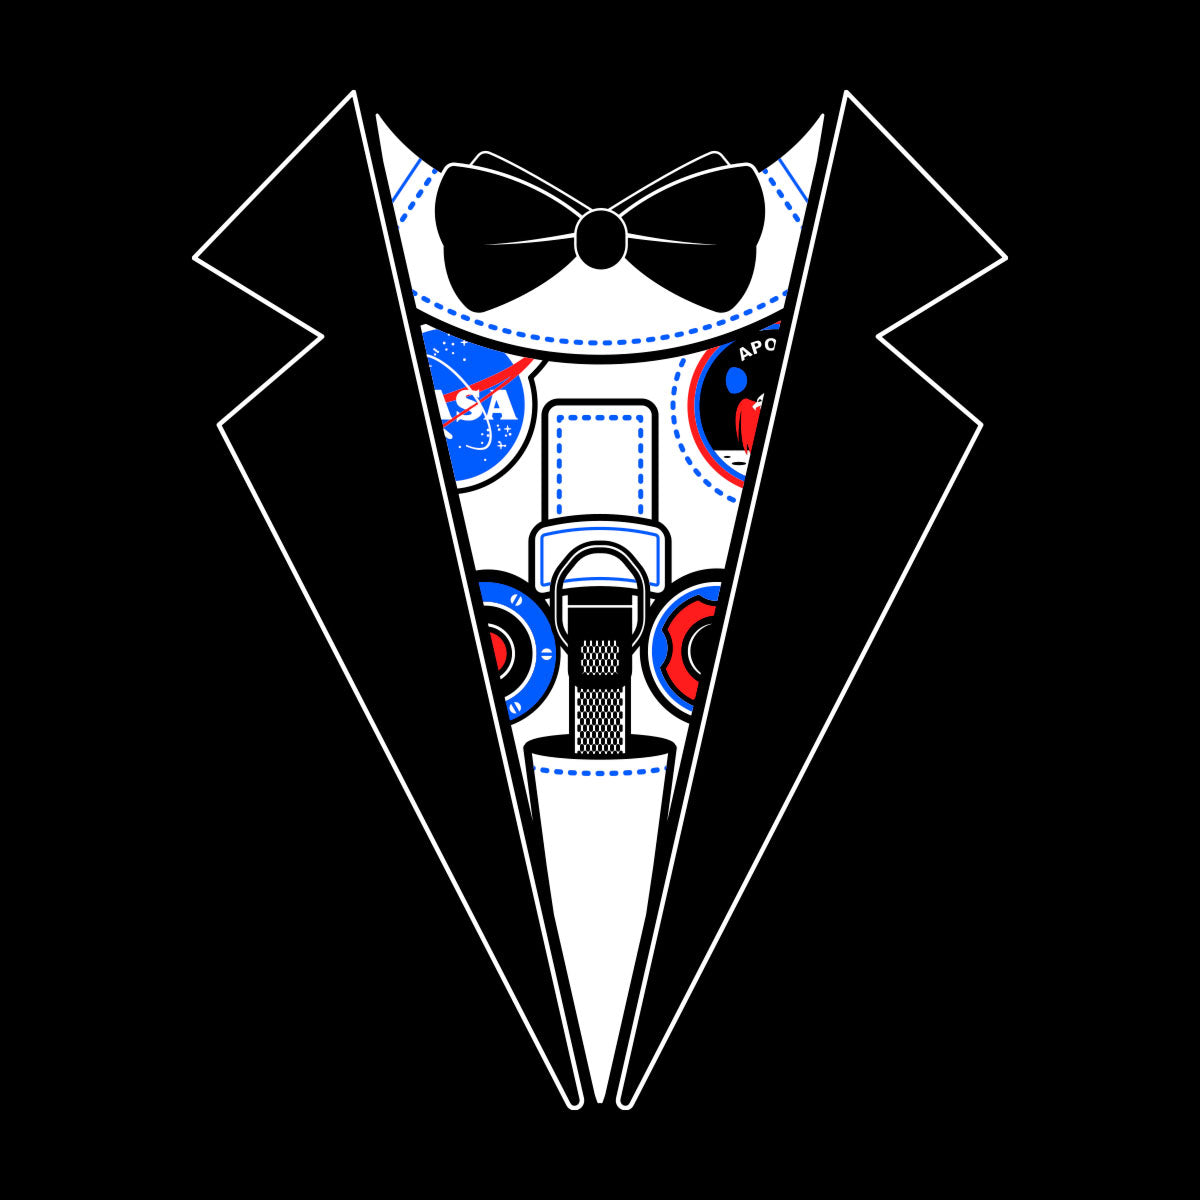 roblox space suit